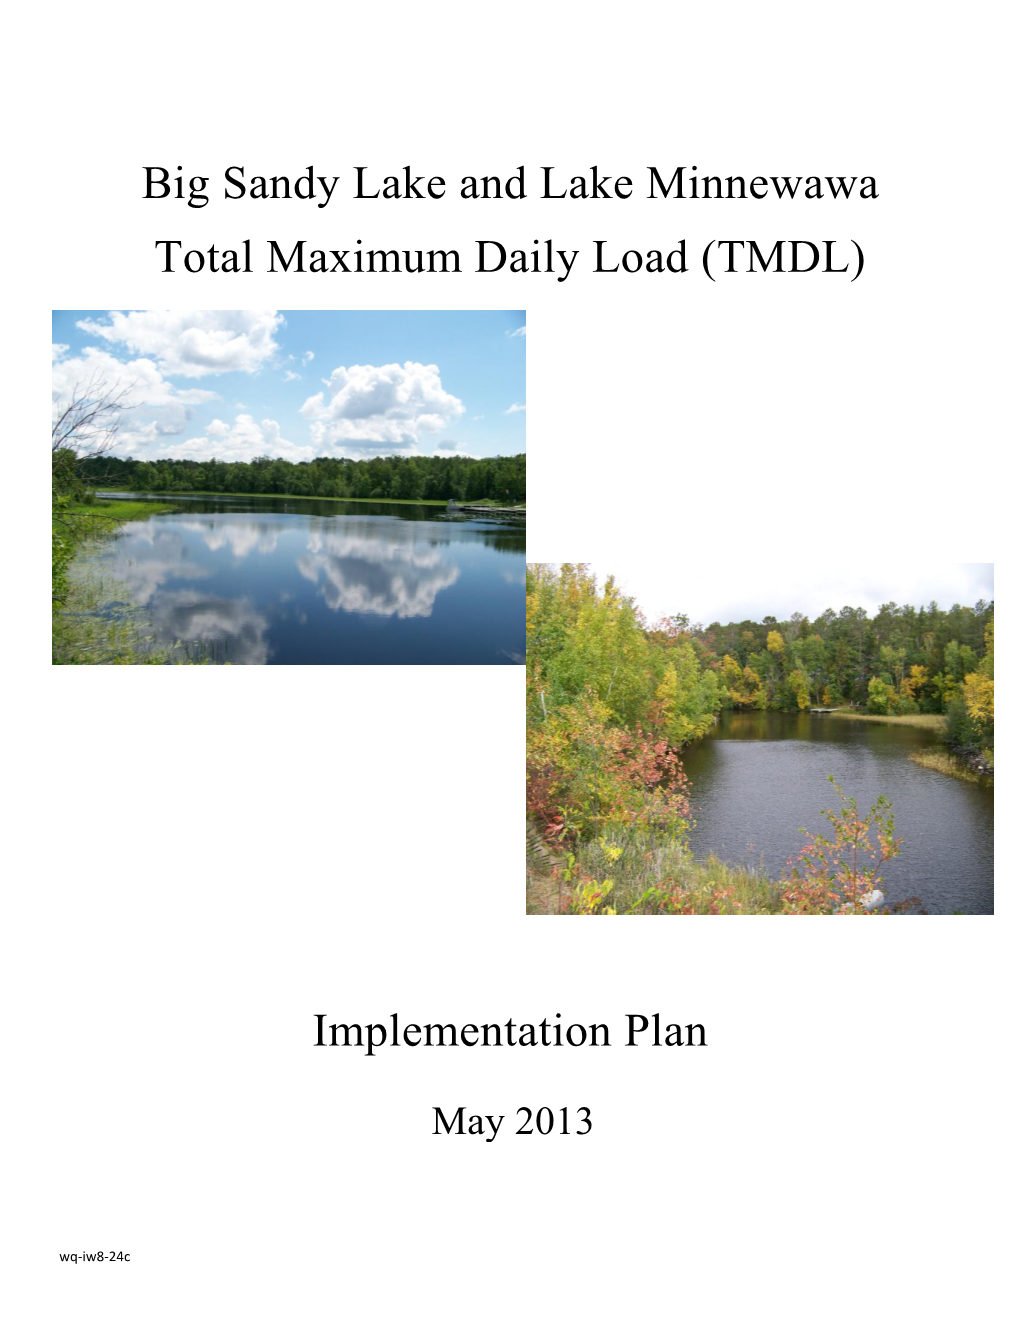 Big Sandy Lake and Lake Minnewawa TMDL Implementation Plan